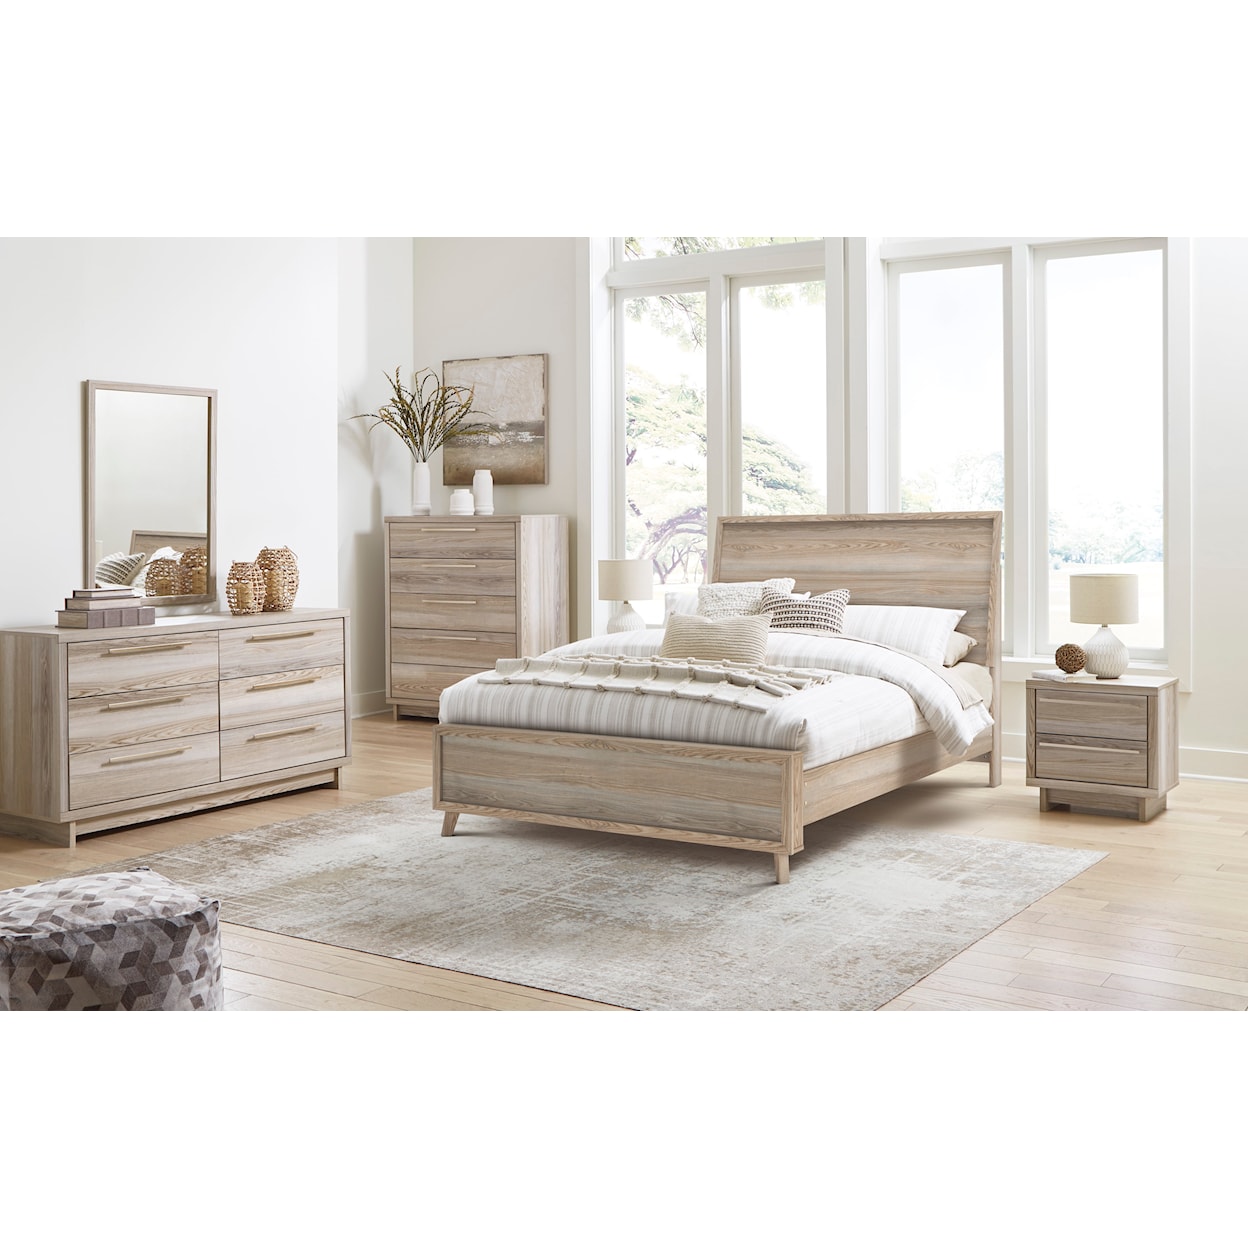 Ashley Furniture Signature Design Hasbrick Queen Bedroom Set